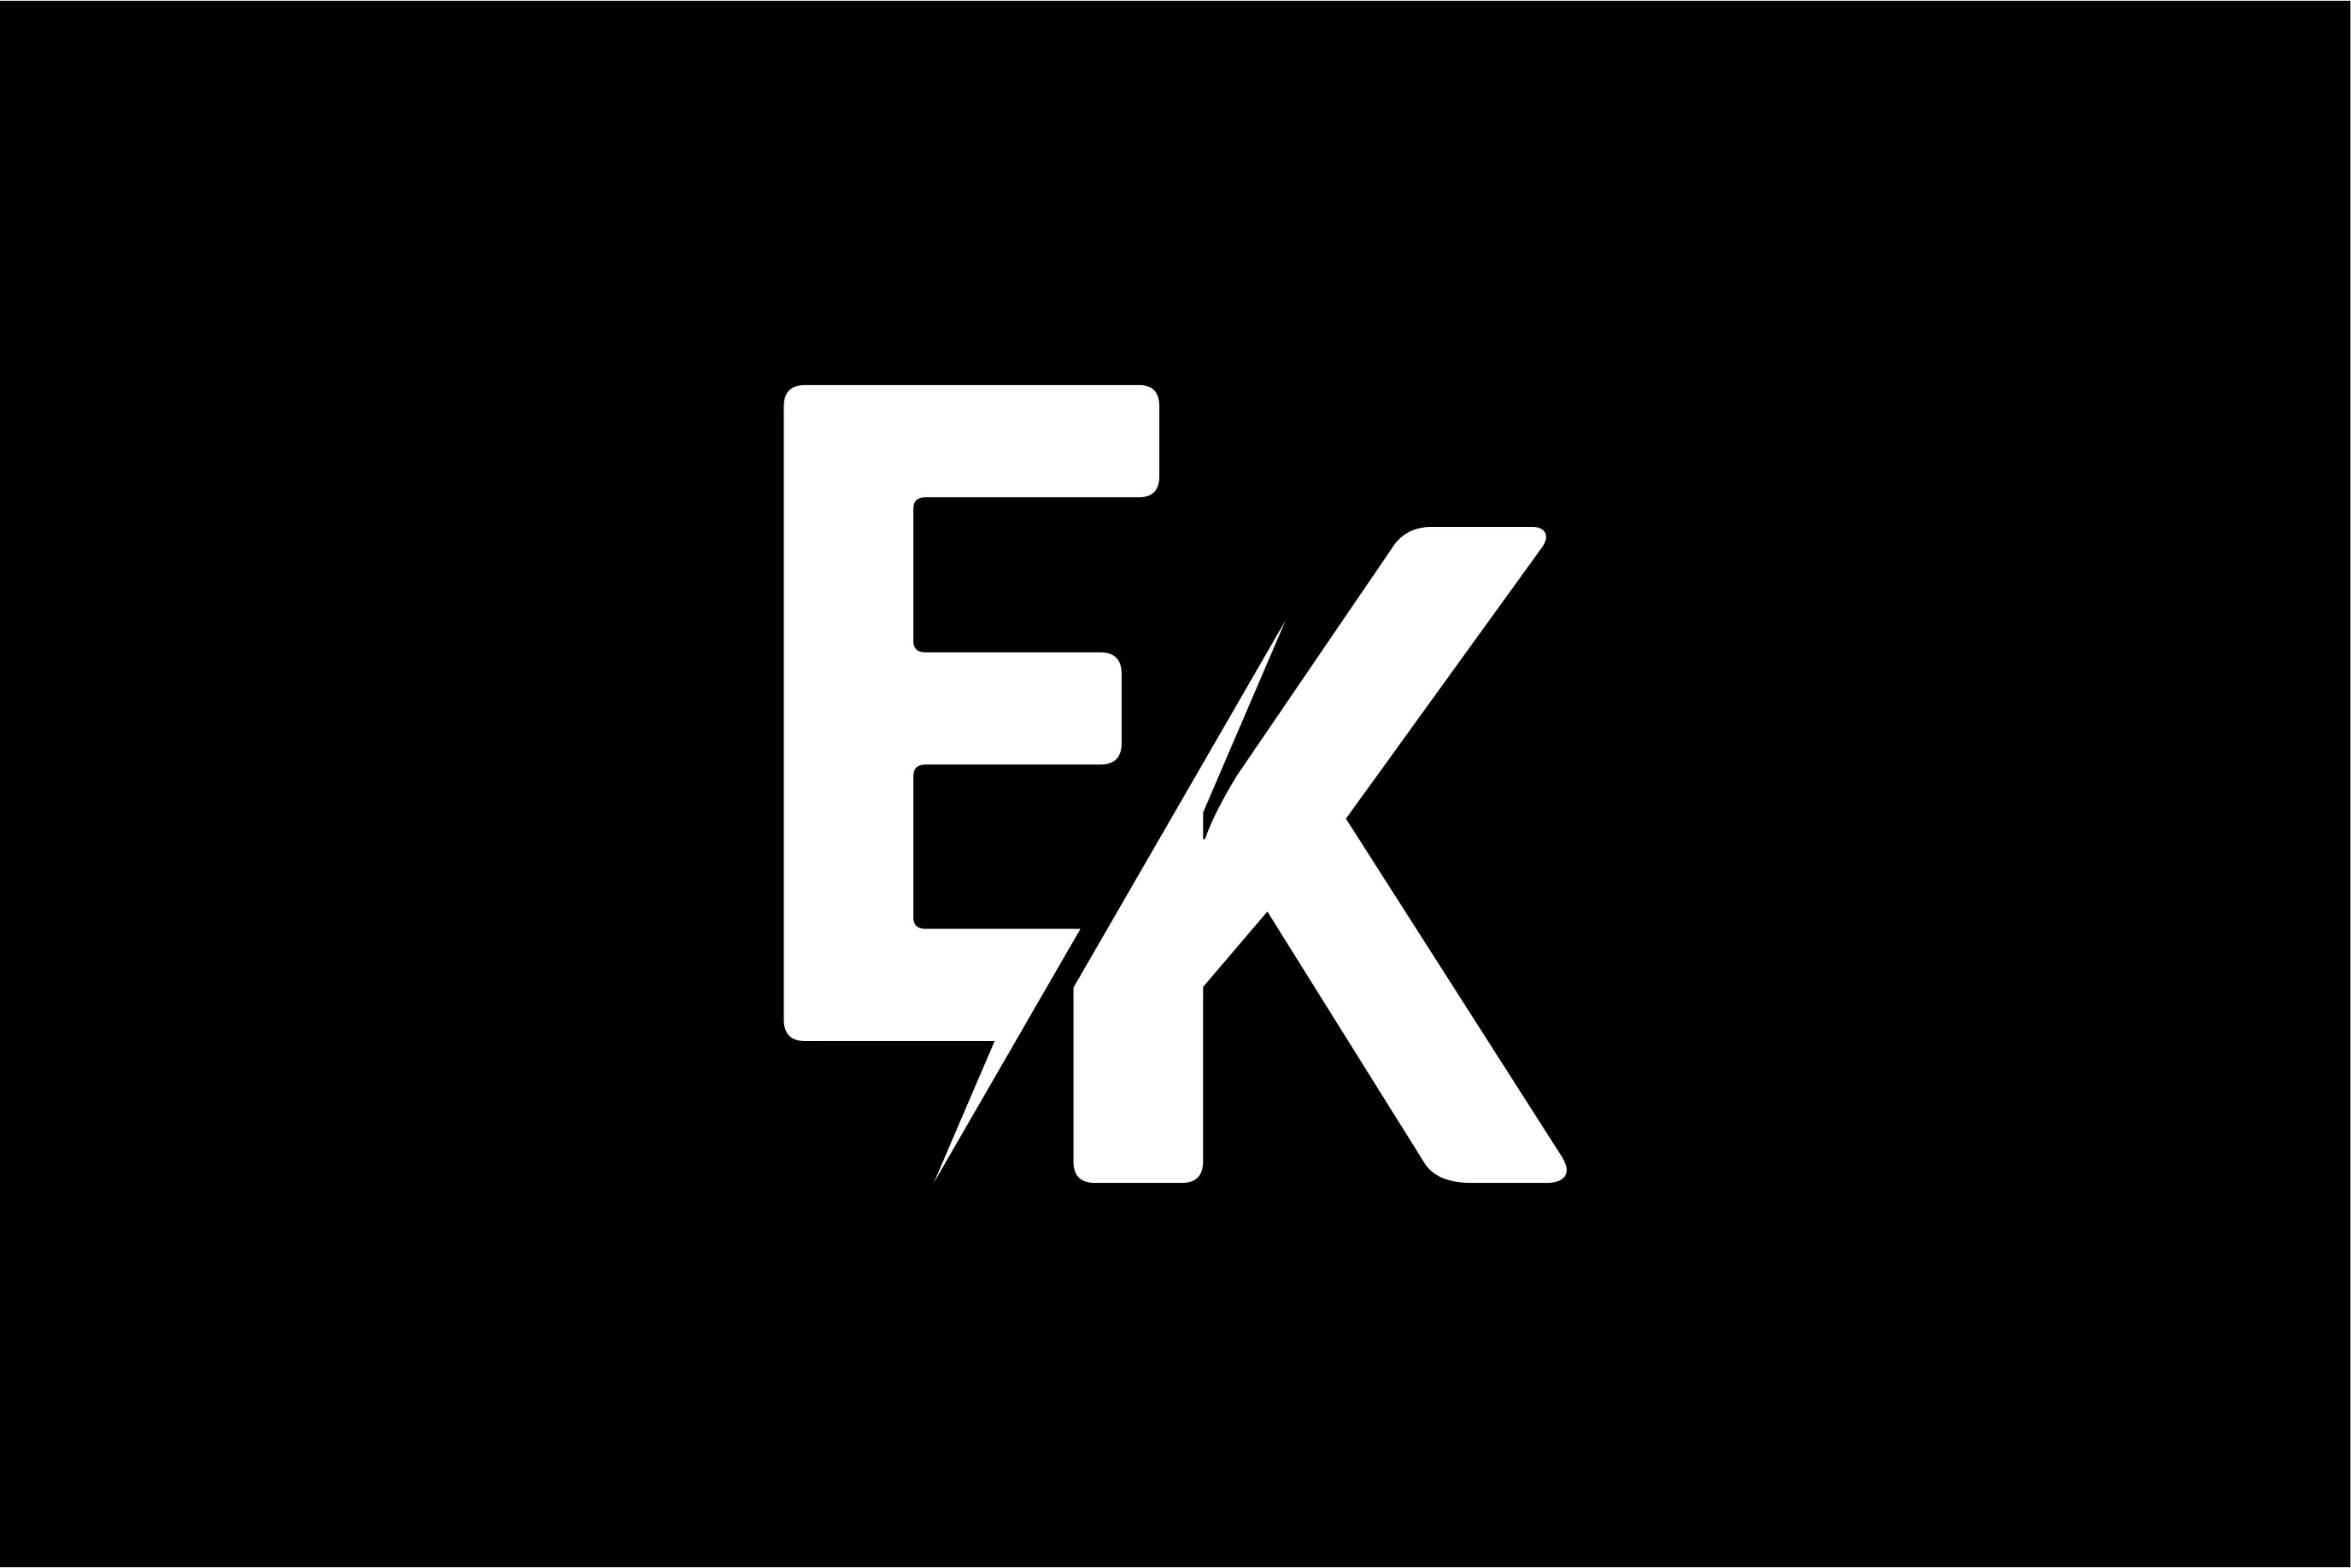 Логотип ЕК. Буква а логотип. Значок ex. Буква x логотип. Формат ек